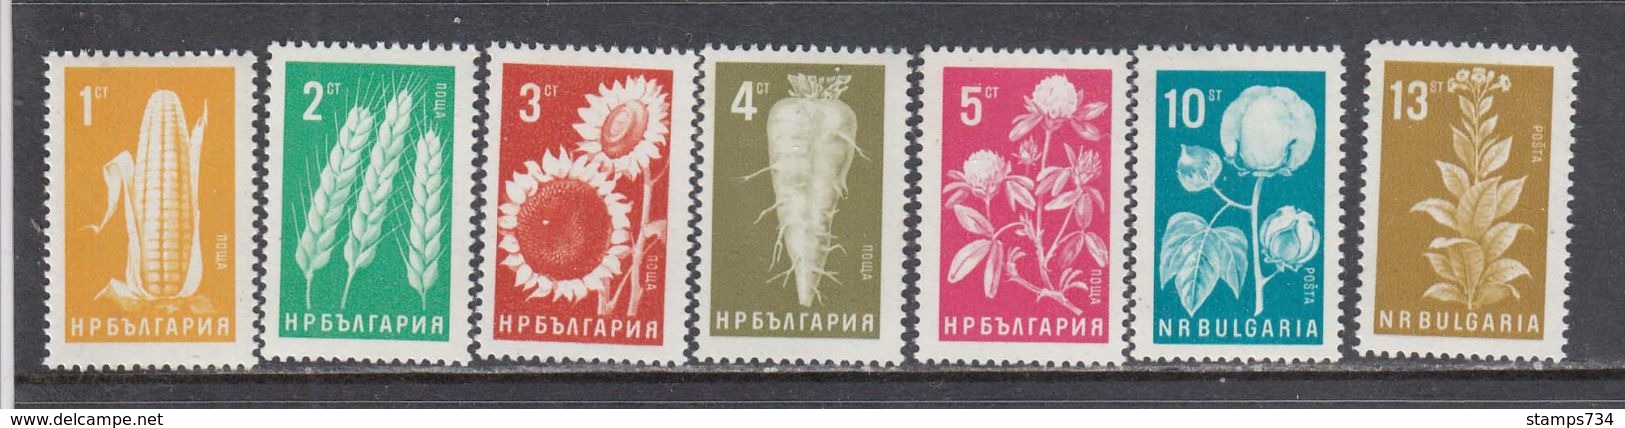 Bulgaria 1965 - Agricultural Products, Mi-Nr. 1522/28, MNH** - Ongebruikt